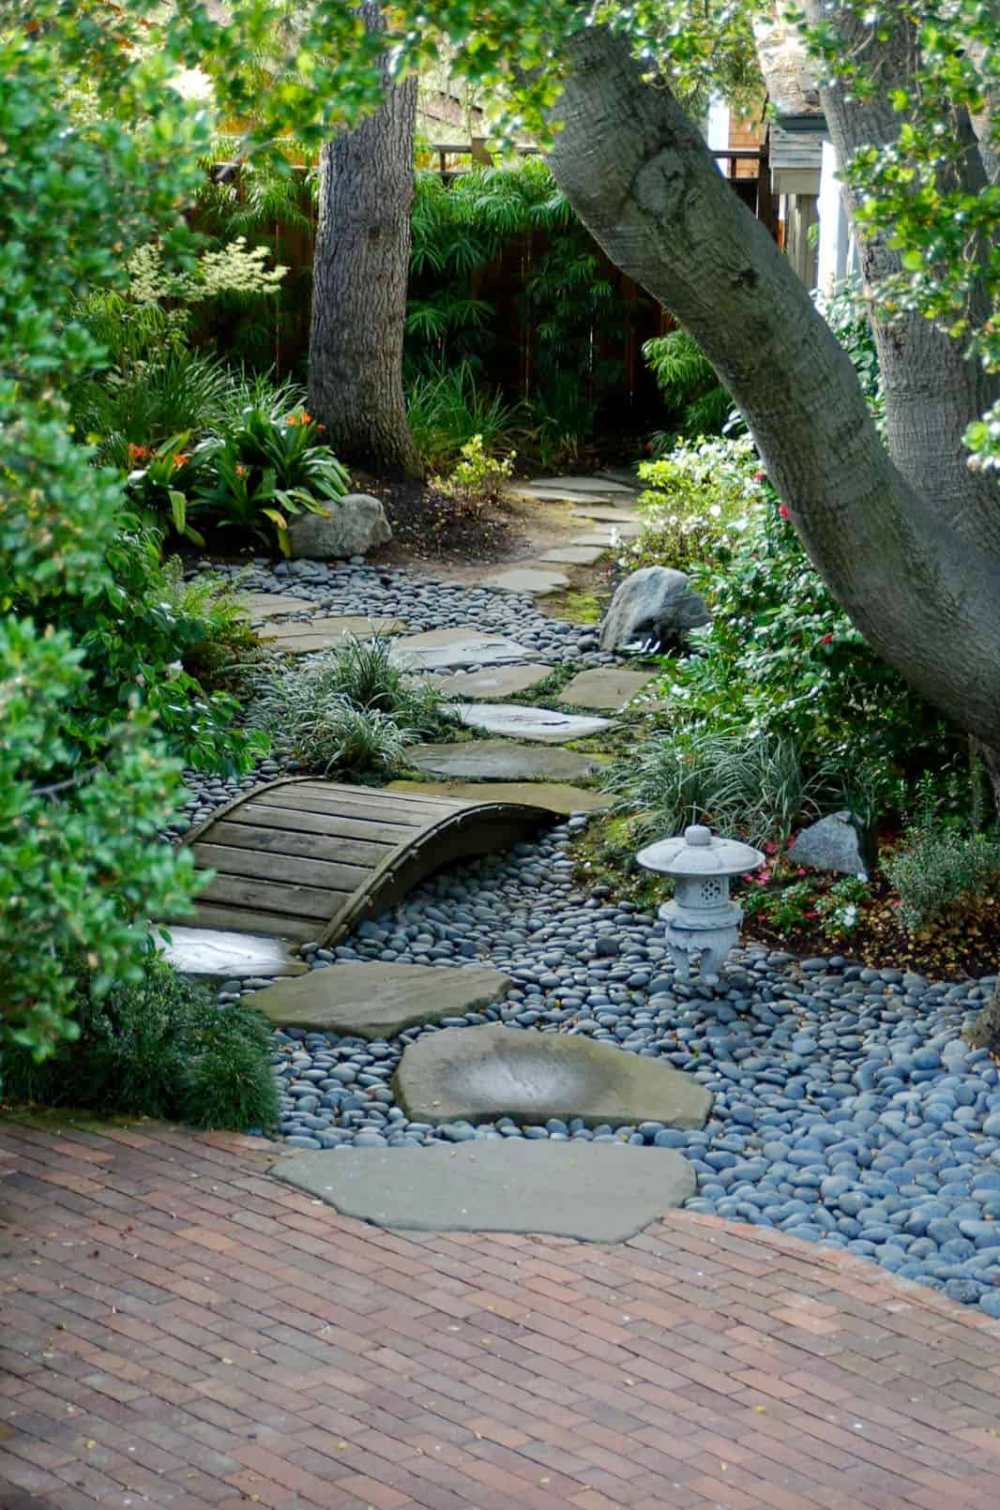 Creative Ways to Enhance Your Backyard Using Rocks